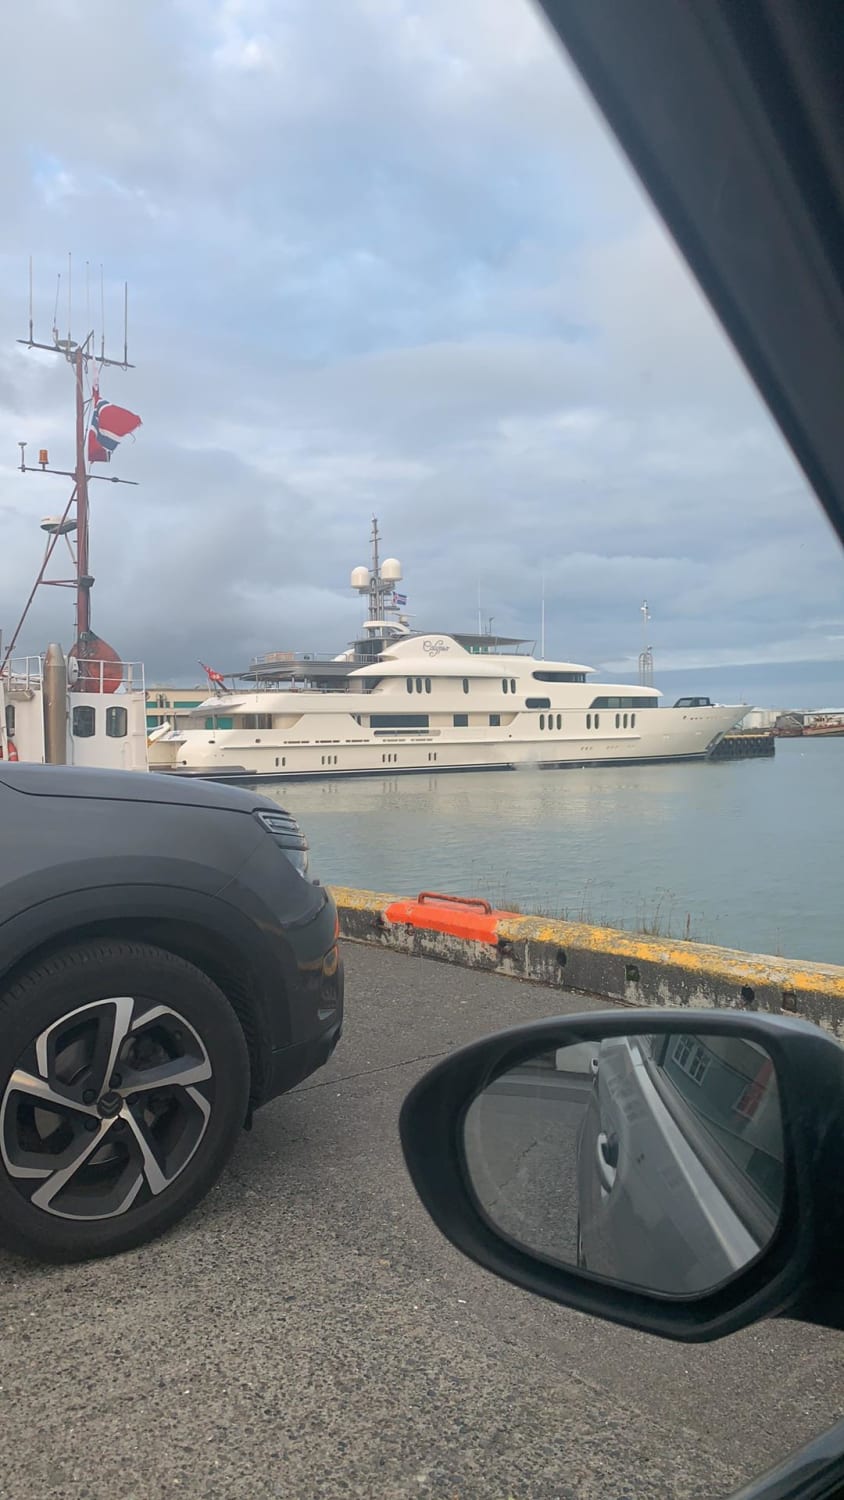 Weird seing a super yacht in 2.500 population town in Iceland